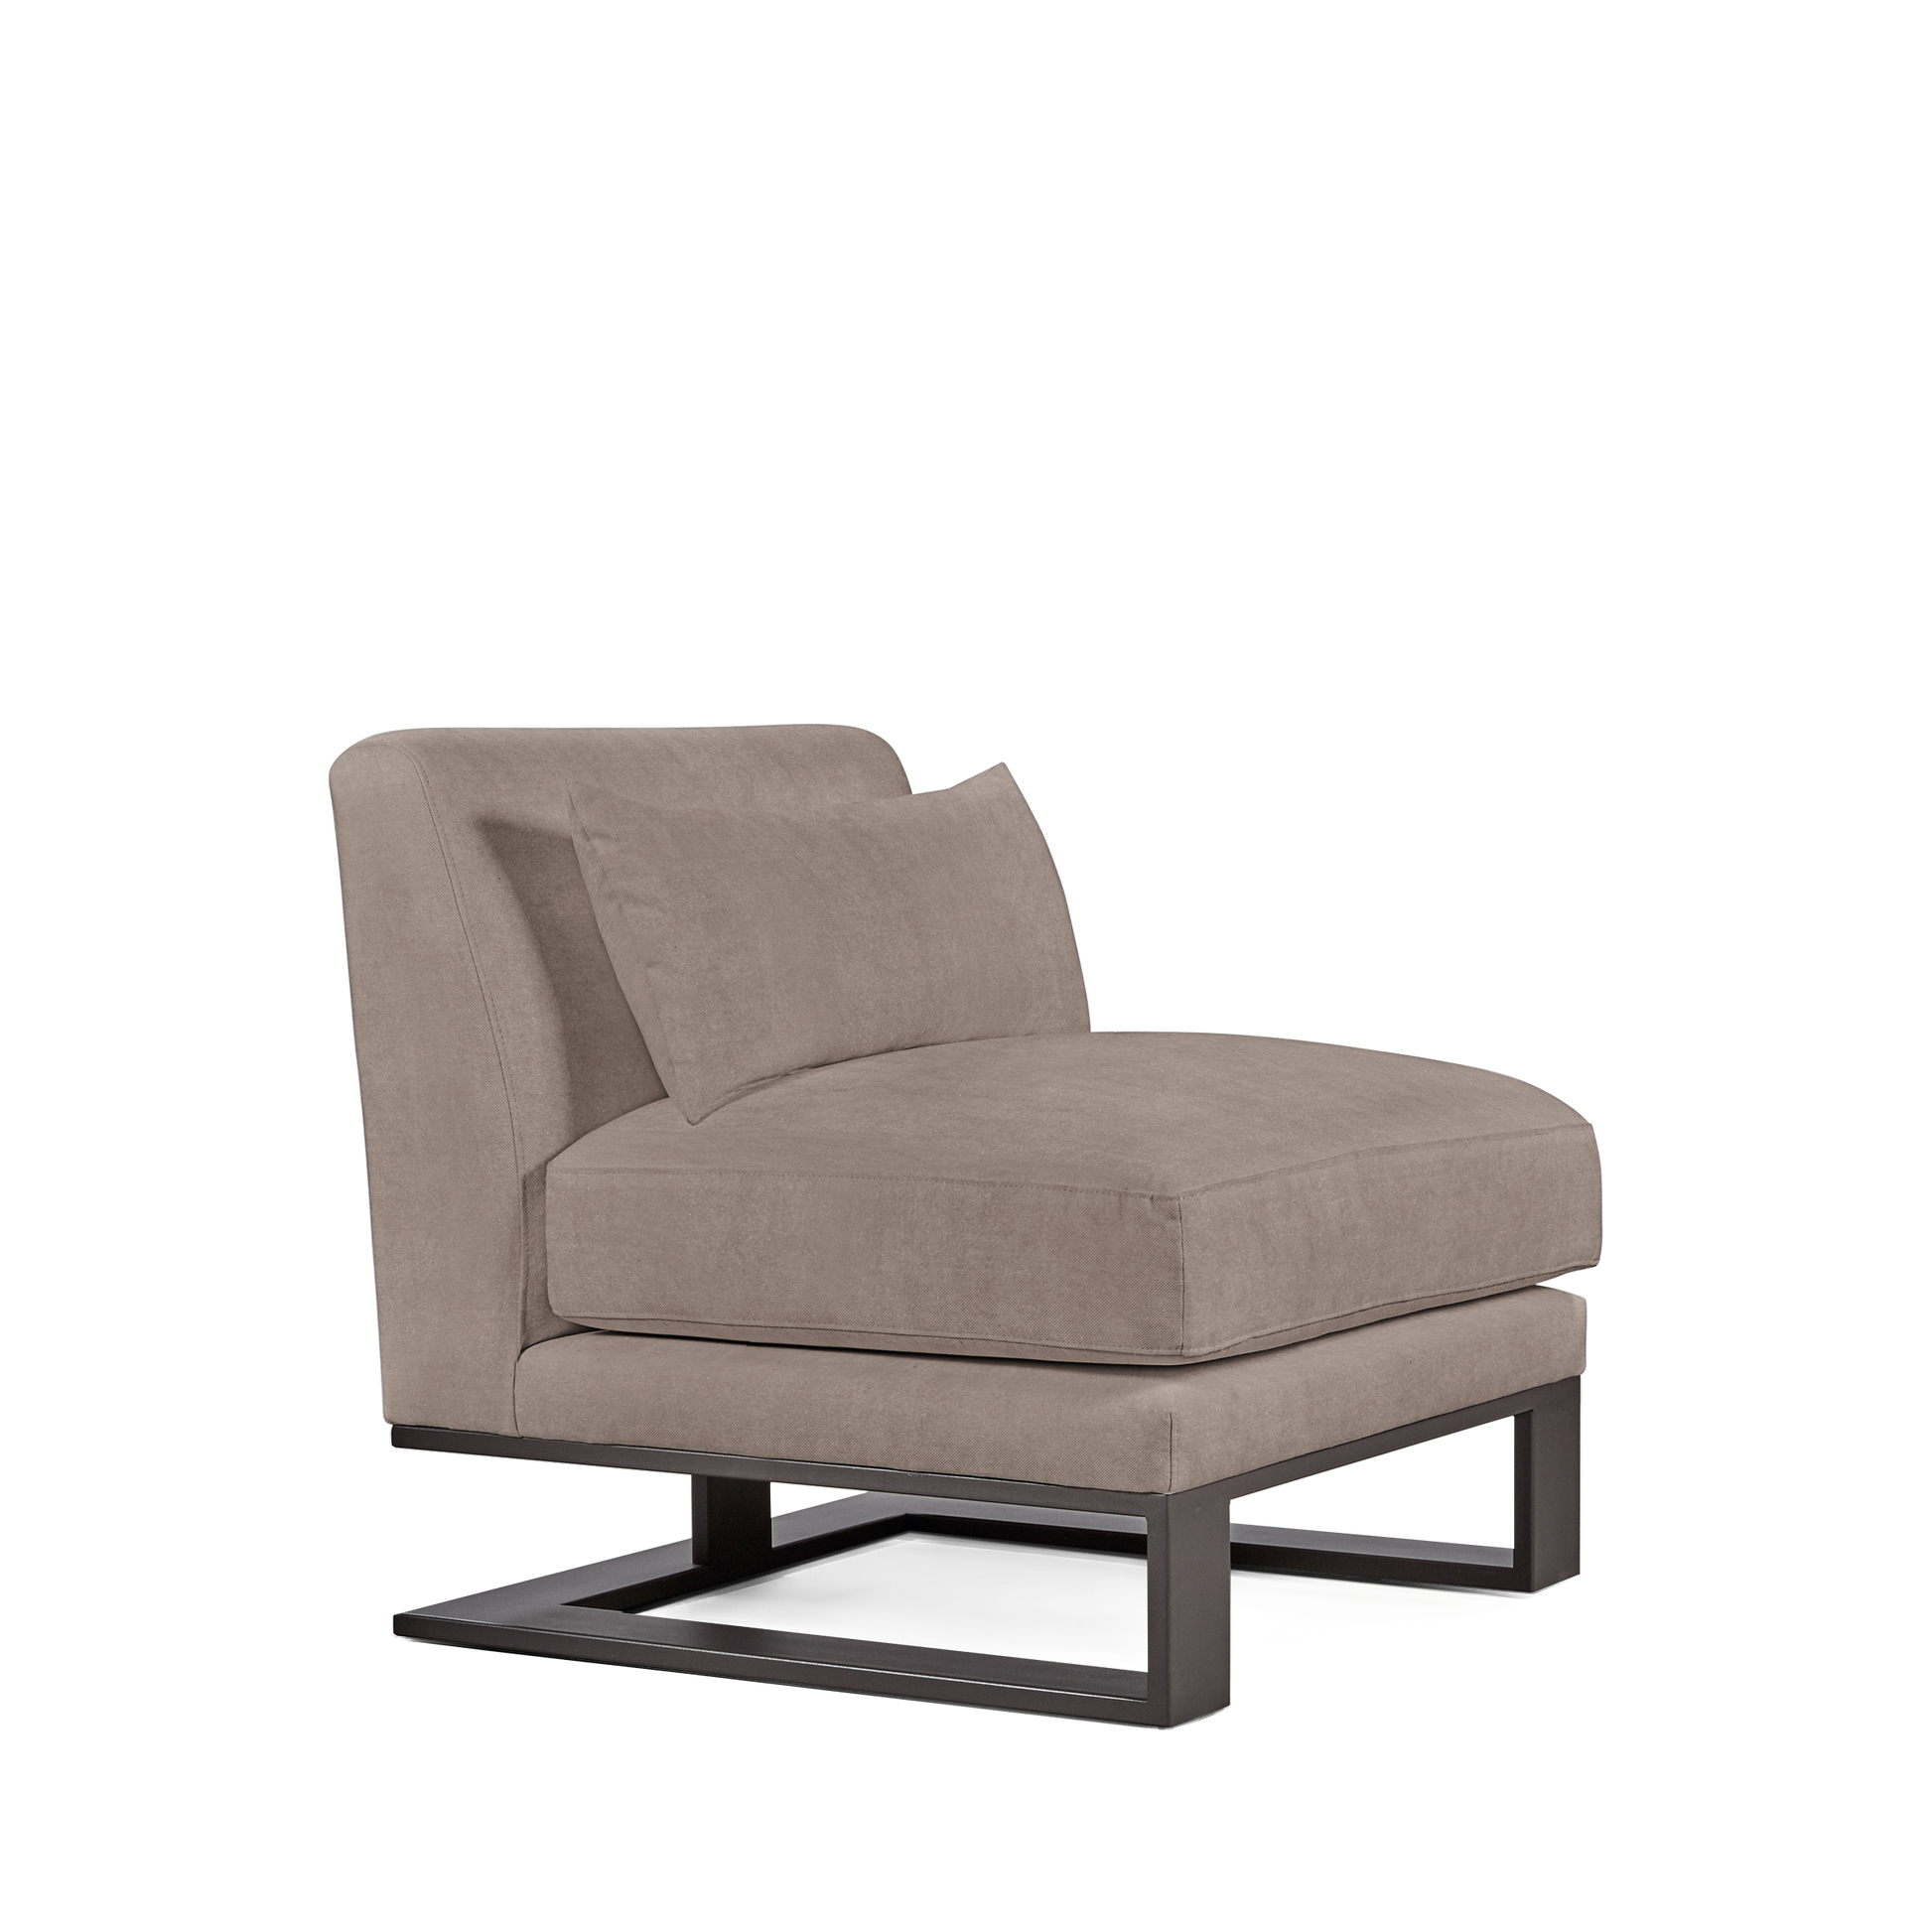 Alpes armchair with London grey textile and moka wood legs 